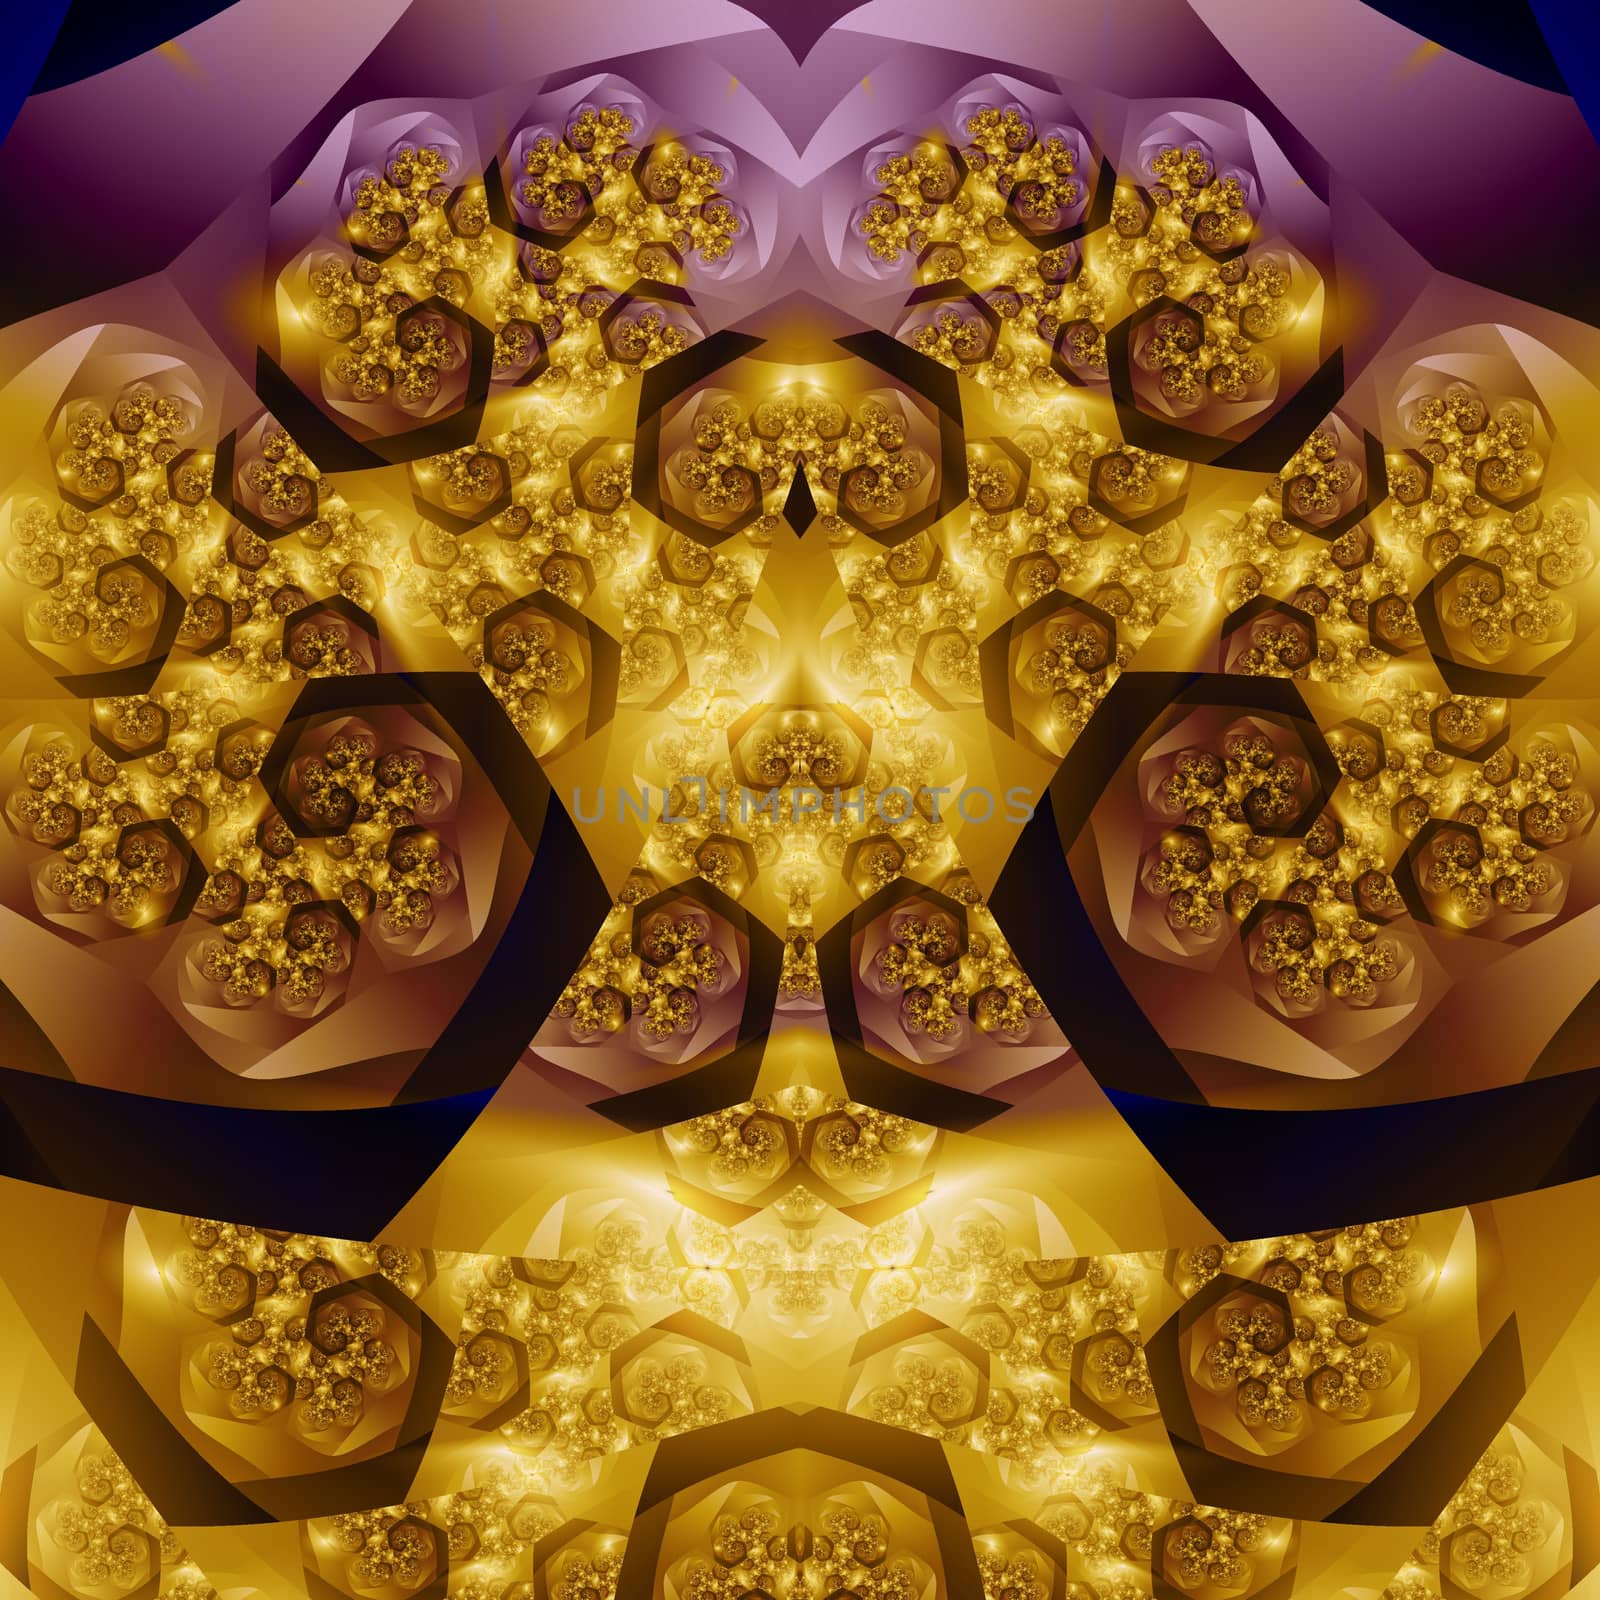 Digital fractal art